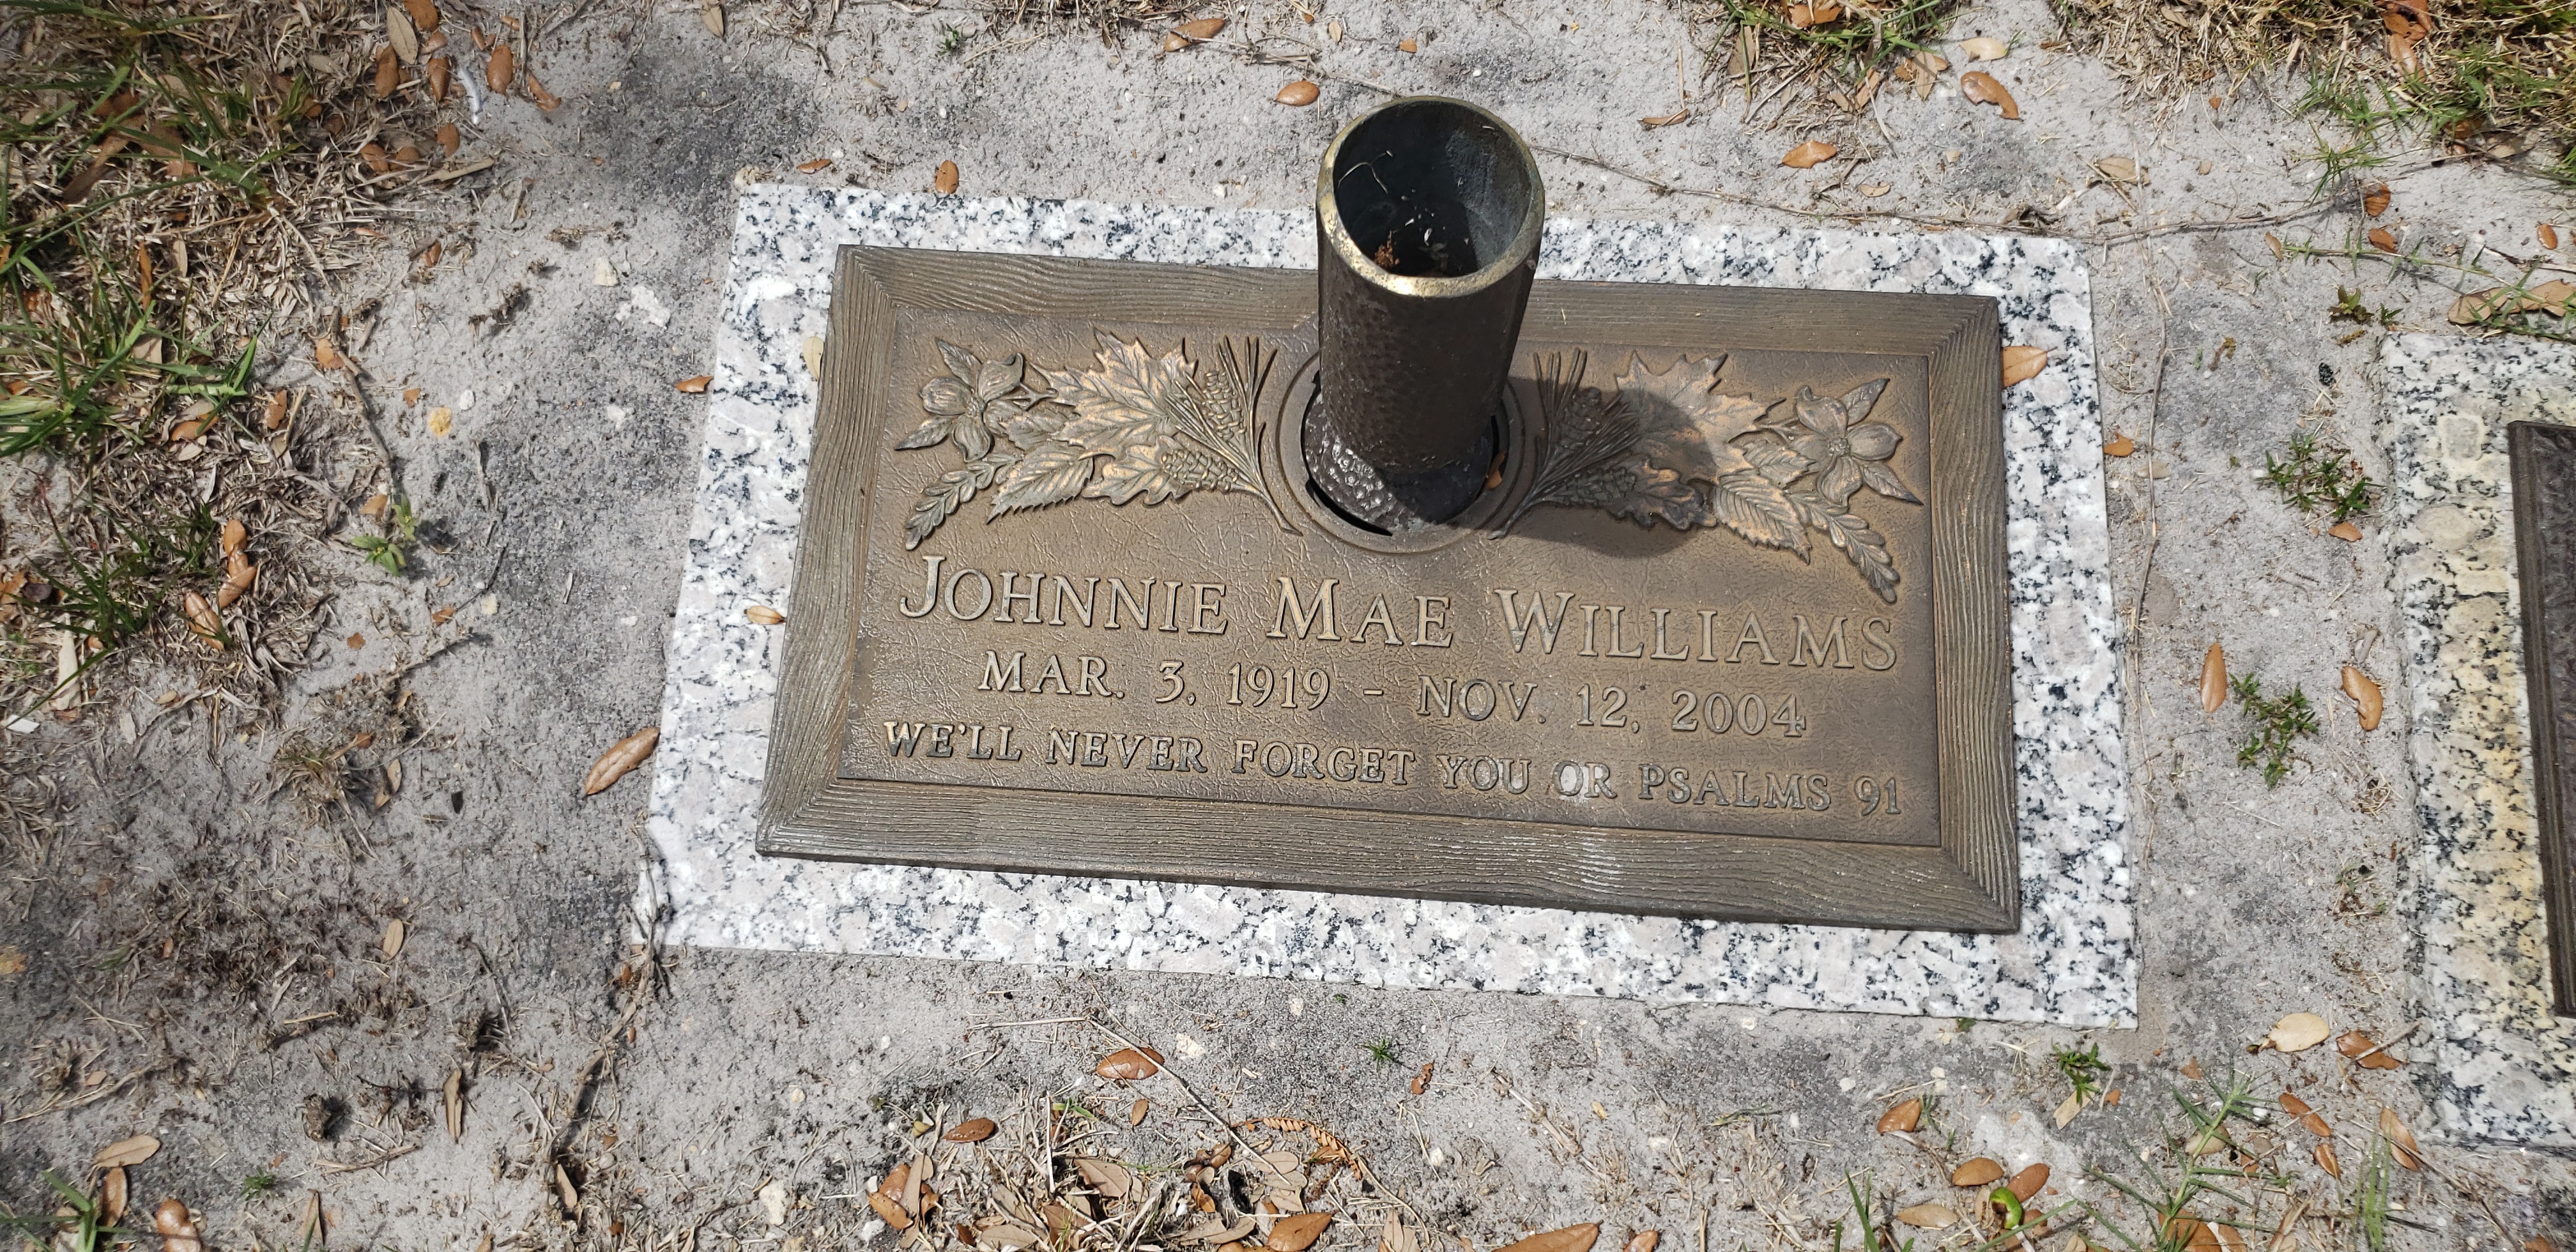 Johnnie Mae Williams